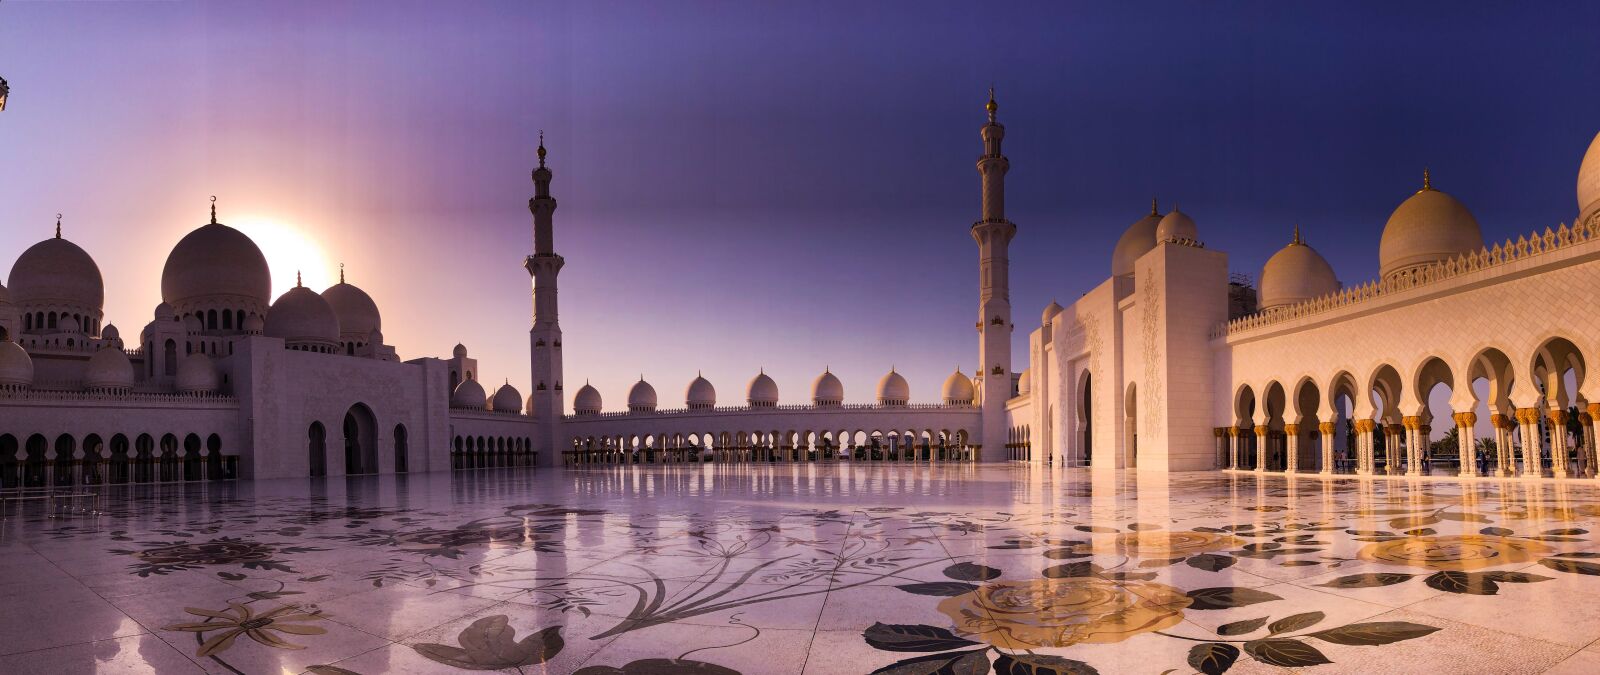 iPhone X back camera 4mm f/1.8 sample photo. Abu dhabi, grand mosque photography